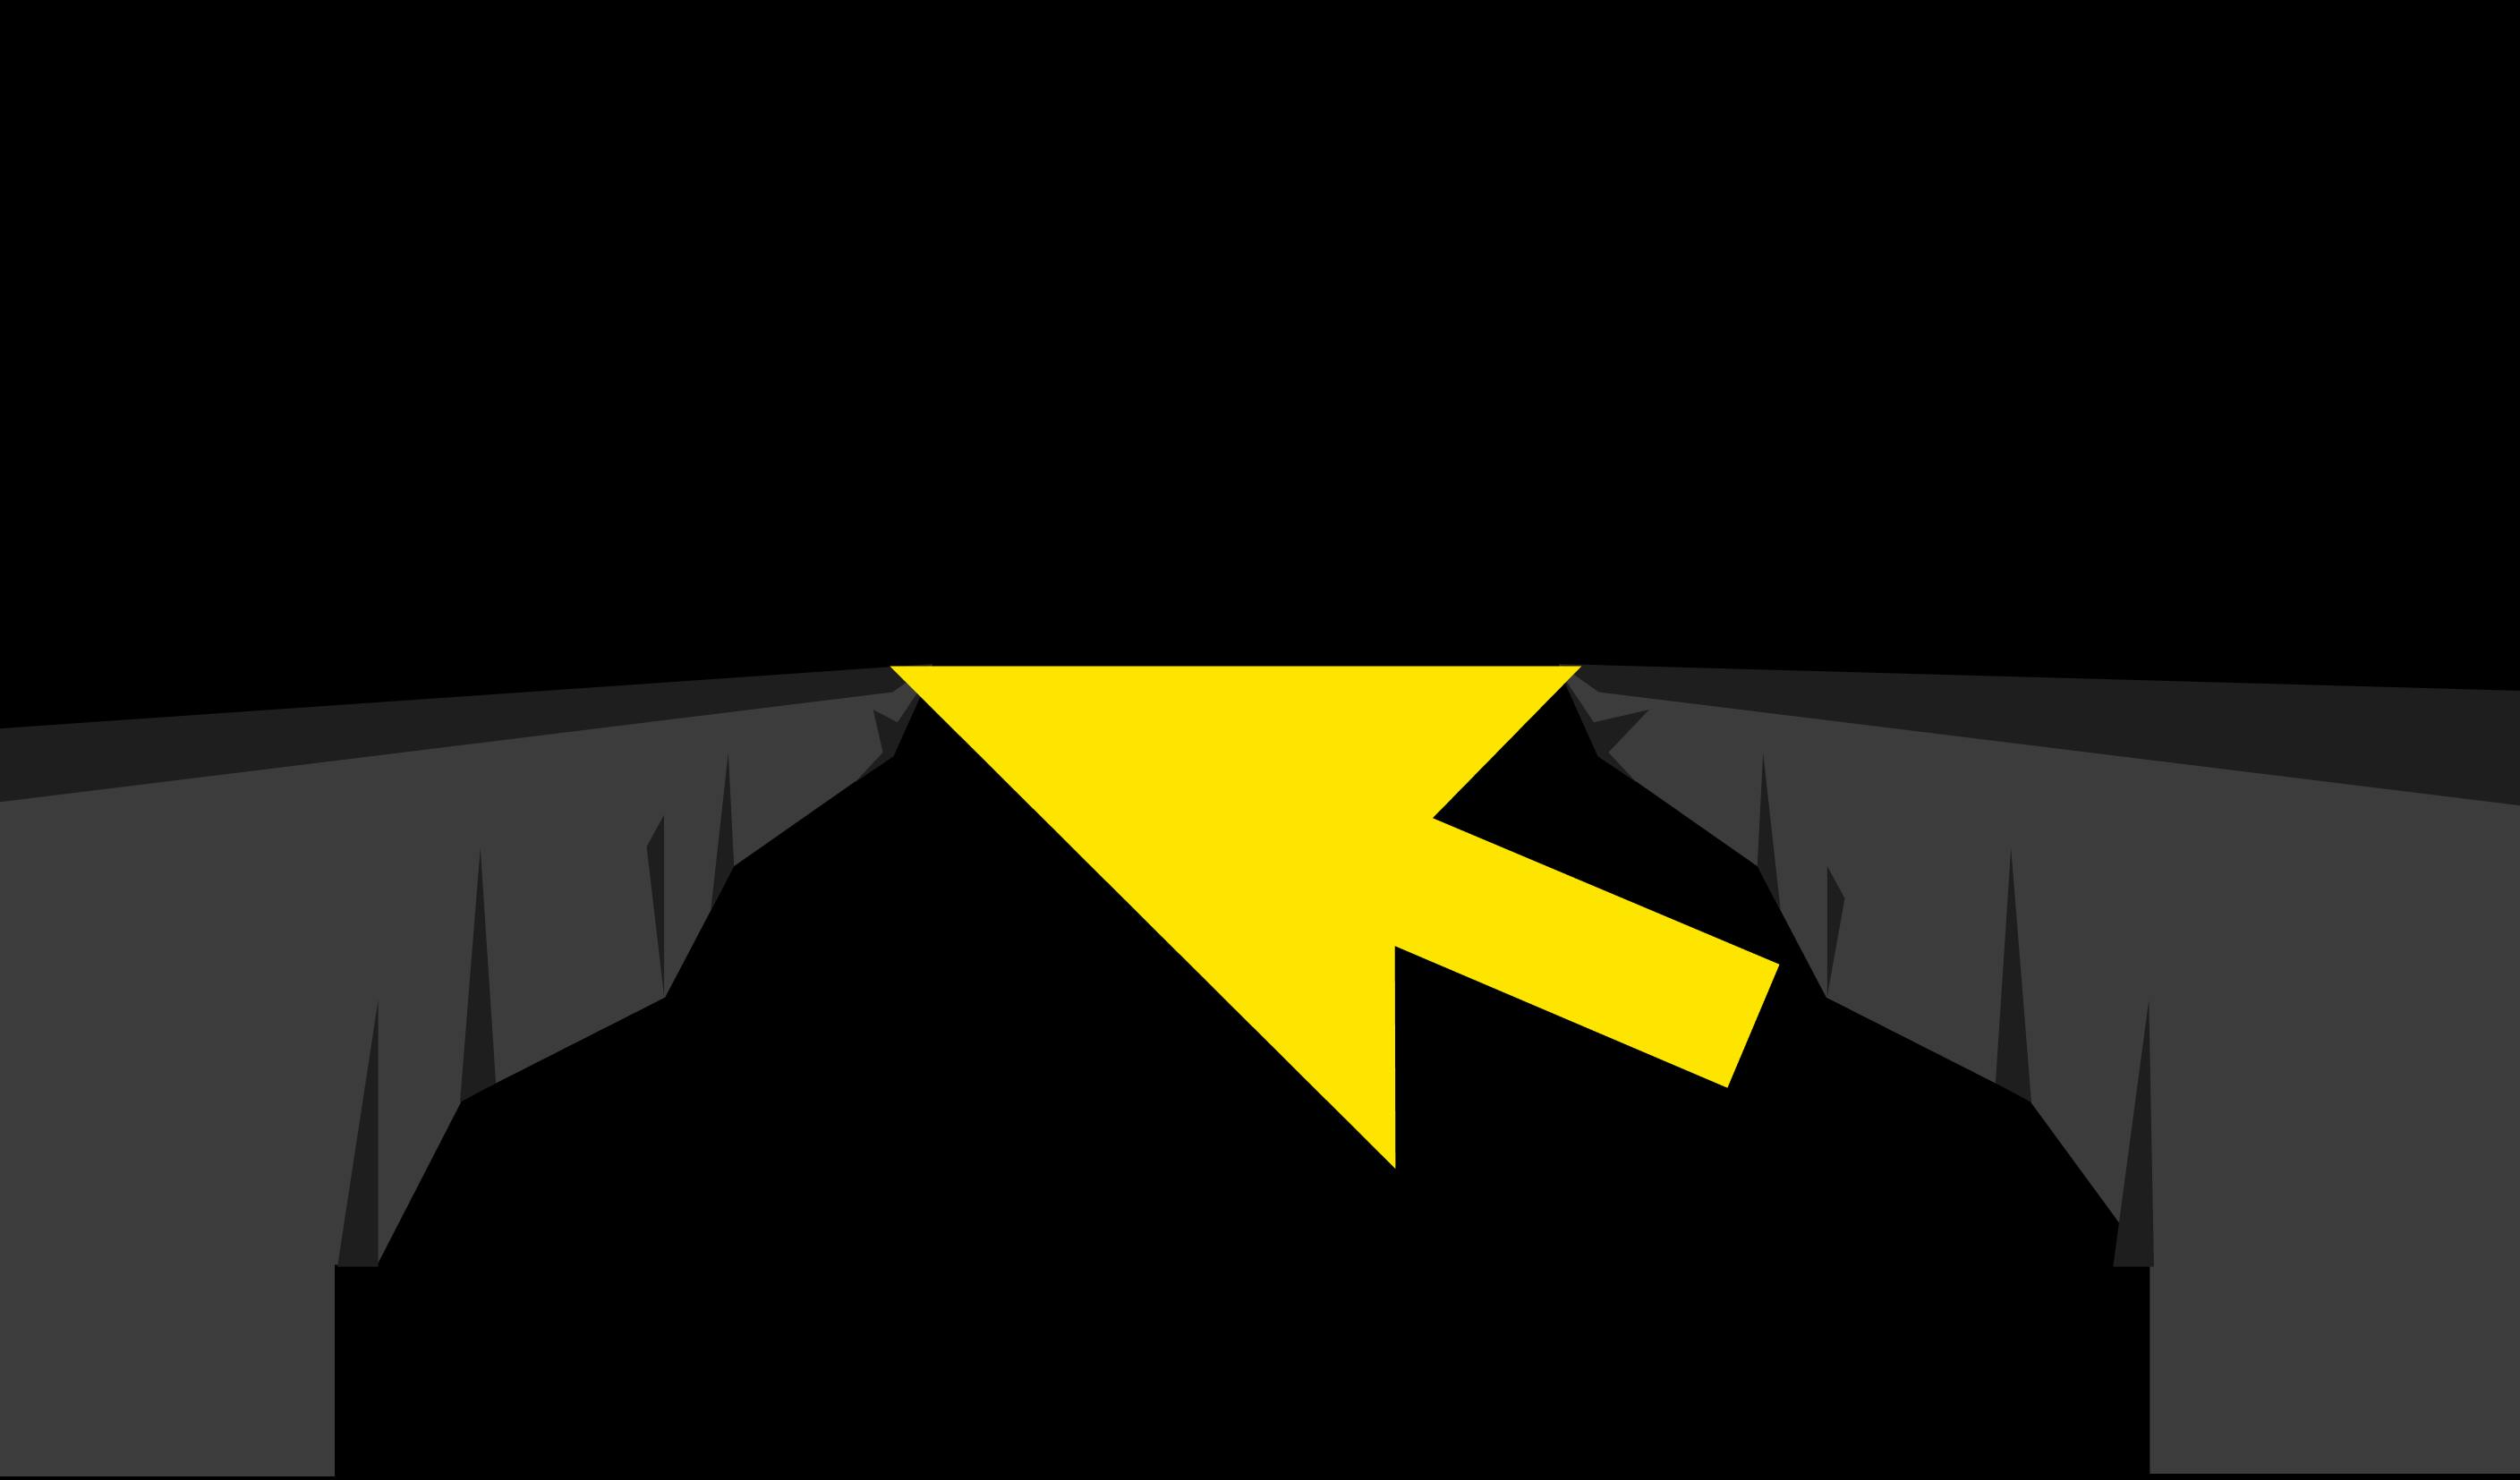 a cursor being used as a bridge between 2 cliffs